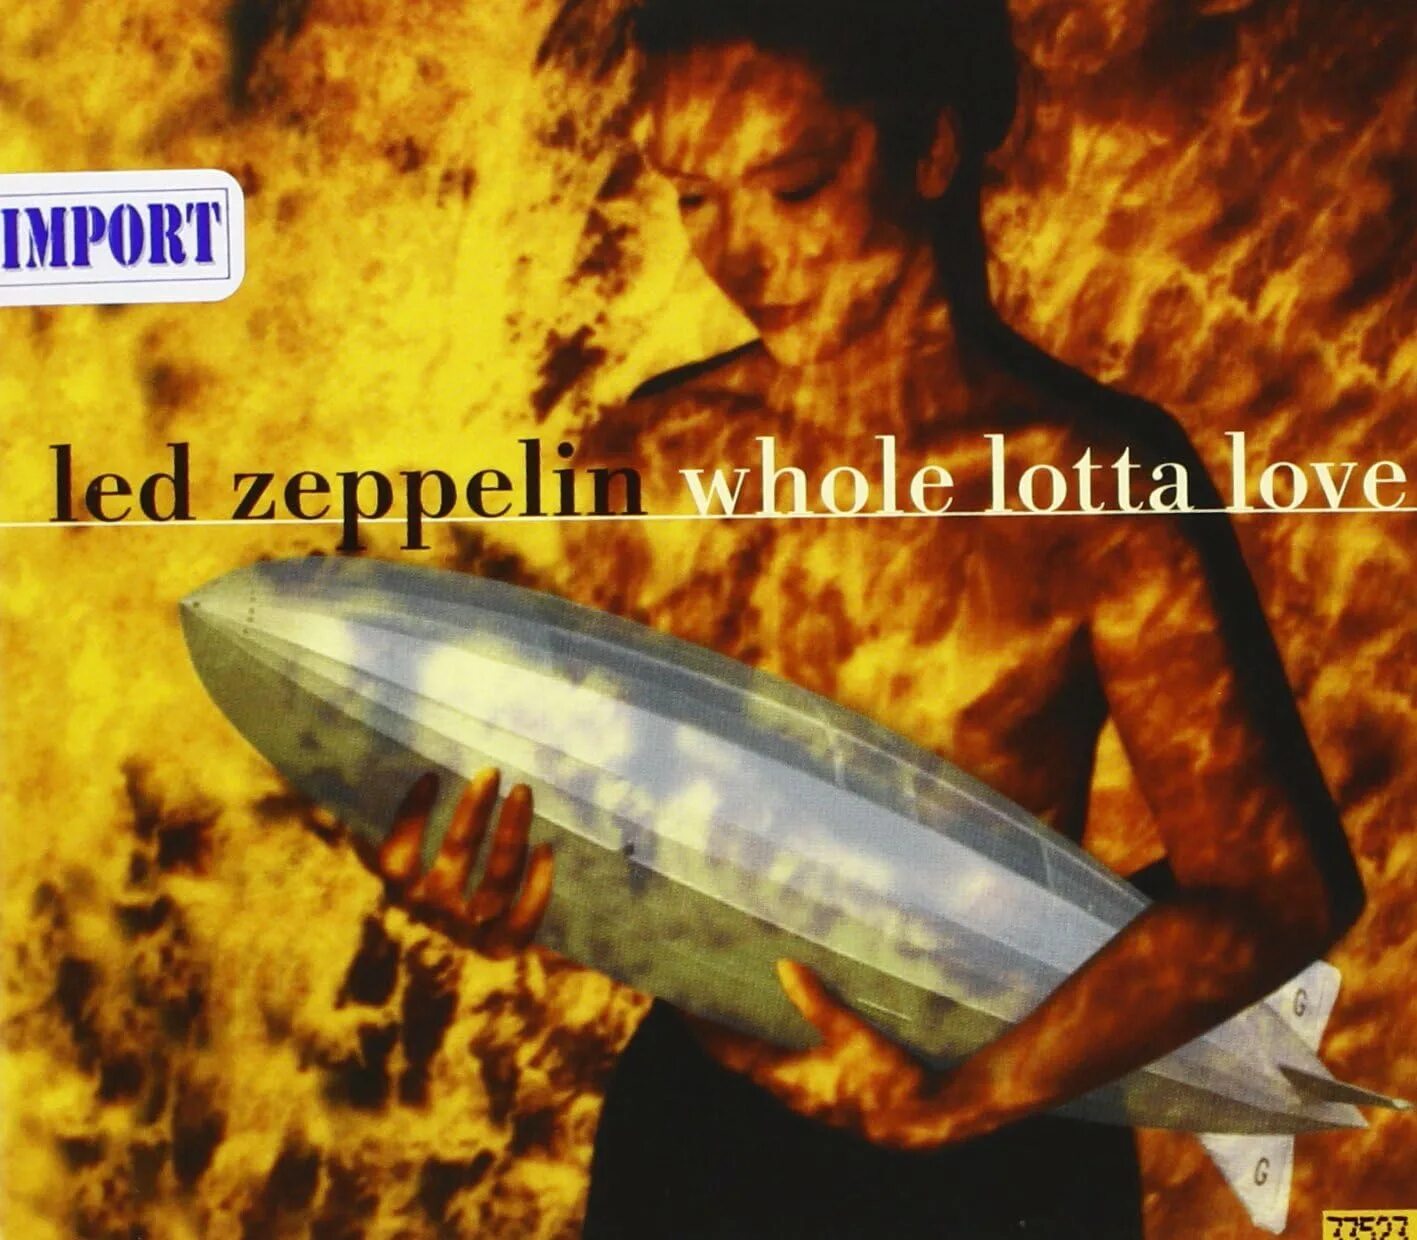 Лед Зеппелин whole Lotta Love. Лёд Зеппелин Лотта лов. Led Zeppelin whole Lotta Love фото. Led Zeppelin «whole Lotta Love» 1969. Led zeppelin whole